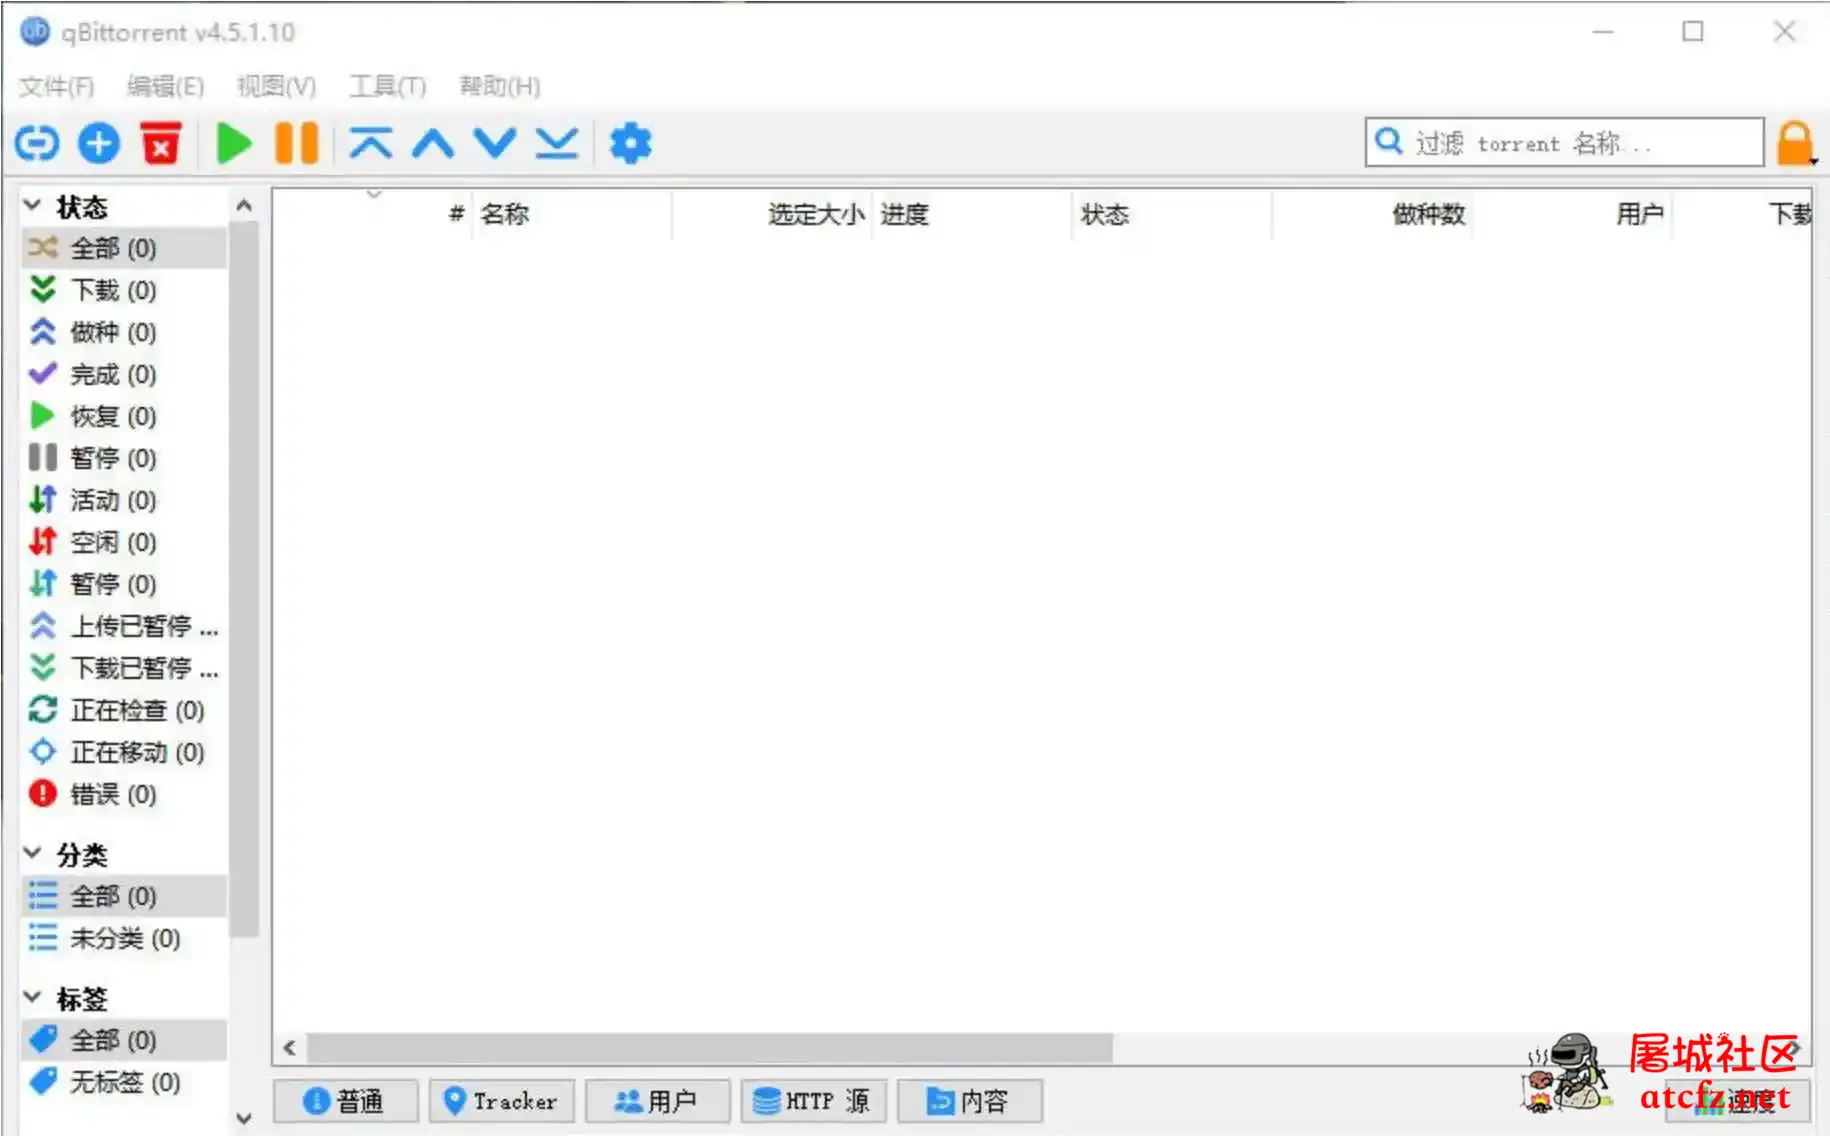 qBittorrent v4.5.3.10增强便携版BT种子下载工具 屠城辅助网www.tcfz1.com2933